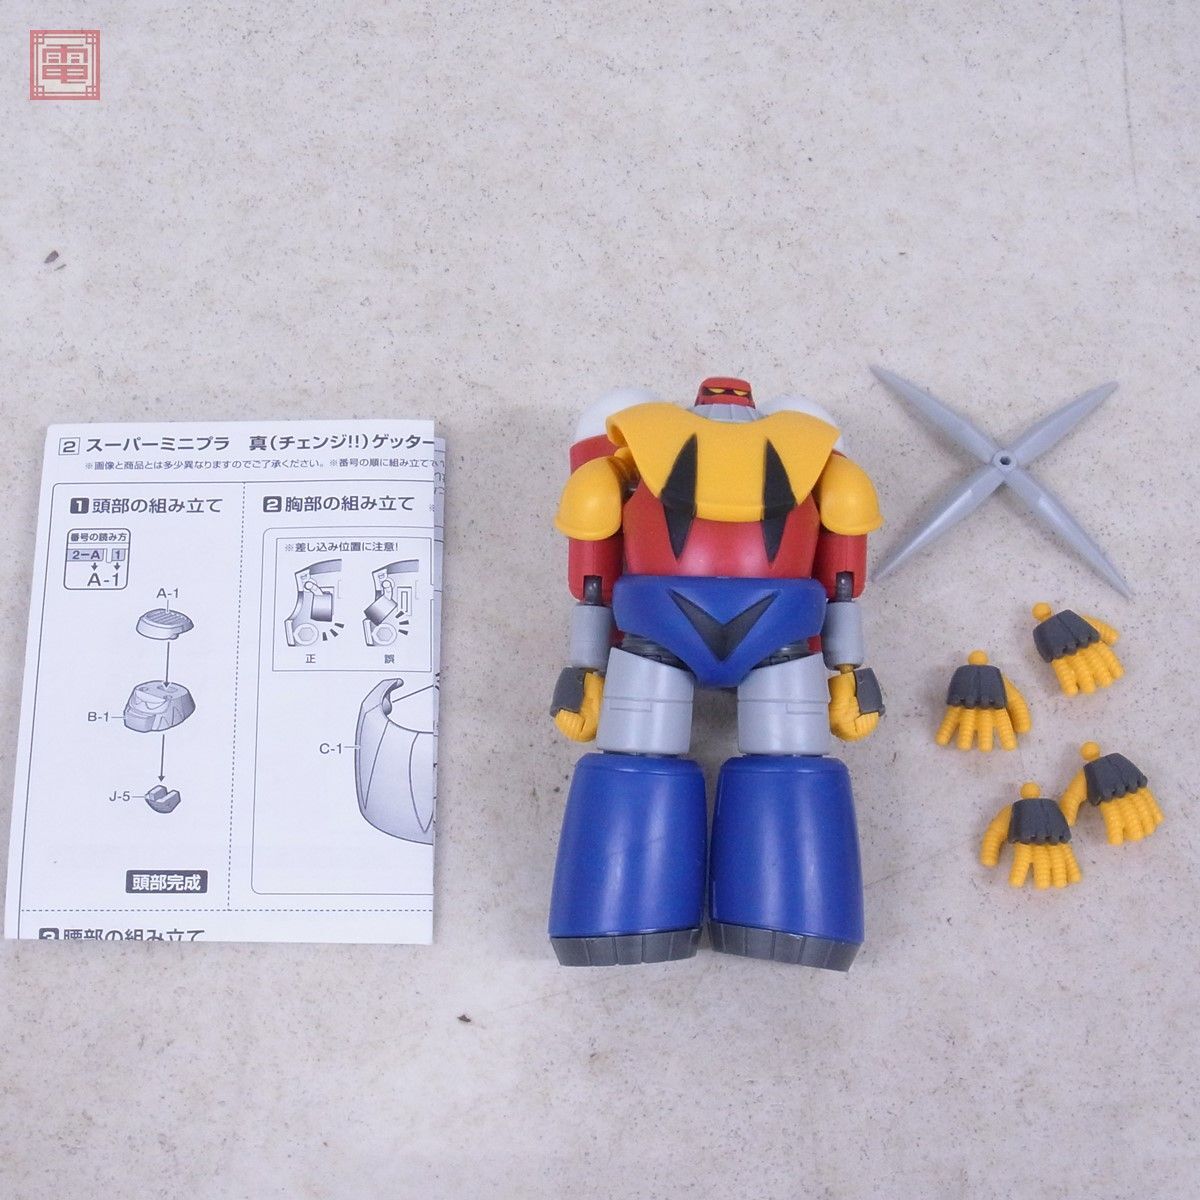  construction settled Bandai super Mini pra genuine ( change!!) Getter Robo Vol.2/3/4 together set genuine geta-1/geta-laiga- other present condition goods [20